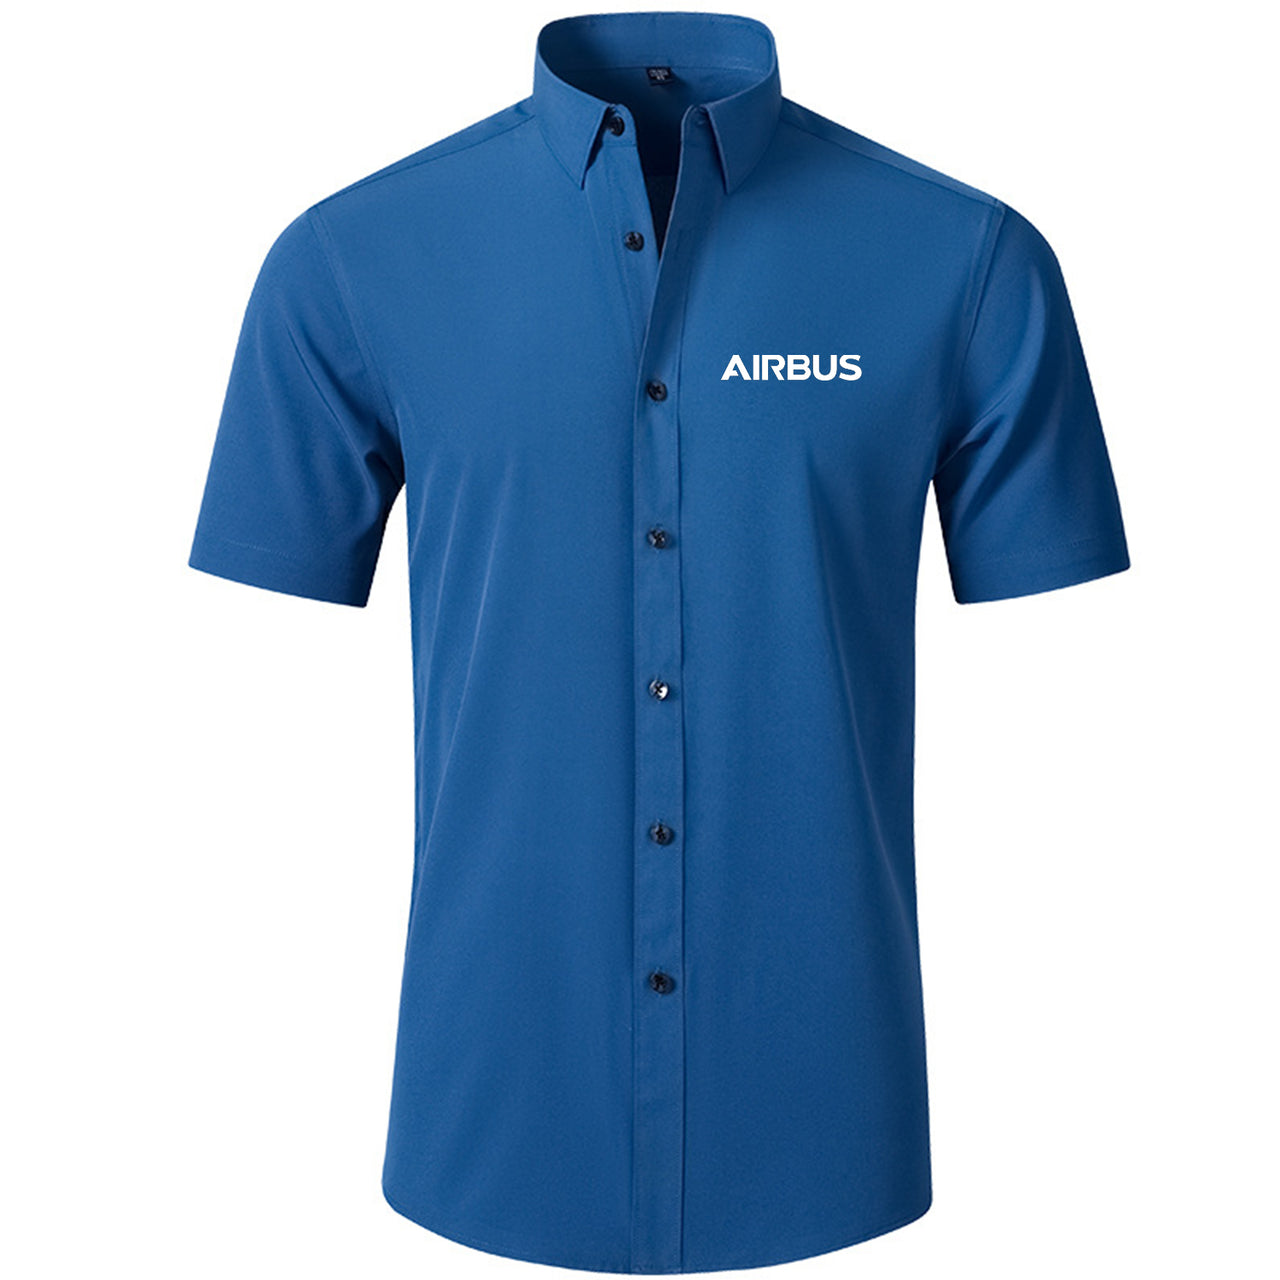 Airbus & Text Designed Short Sleeve Shirts